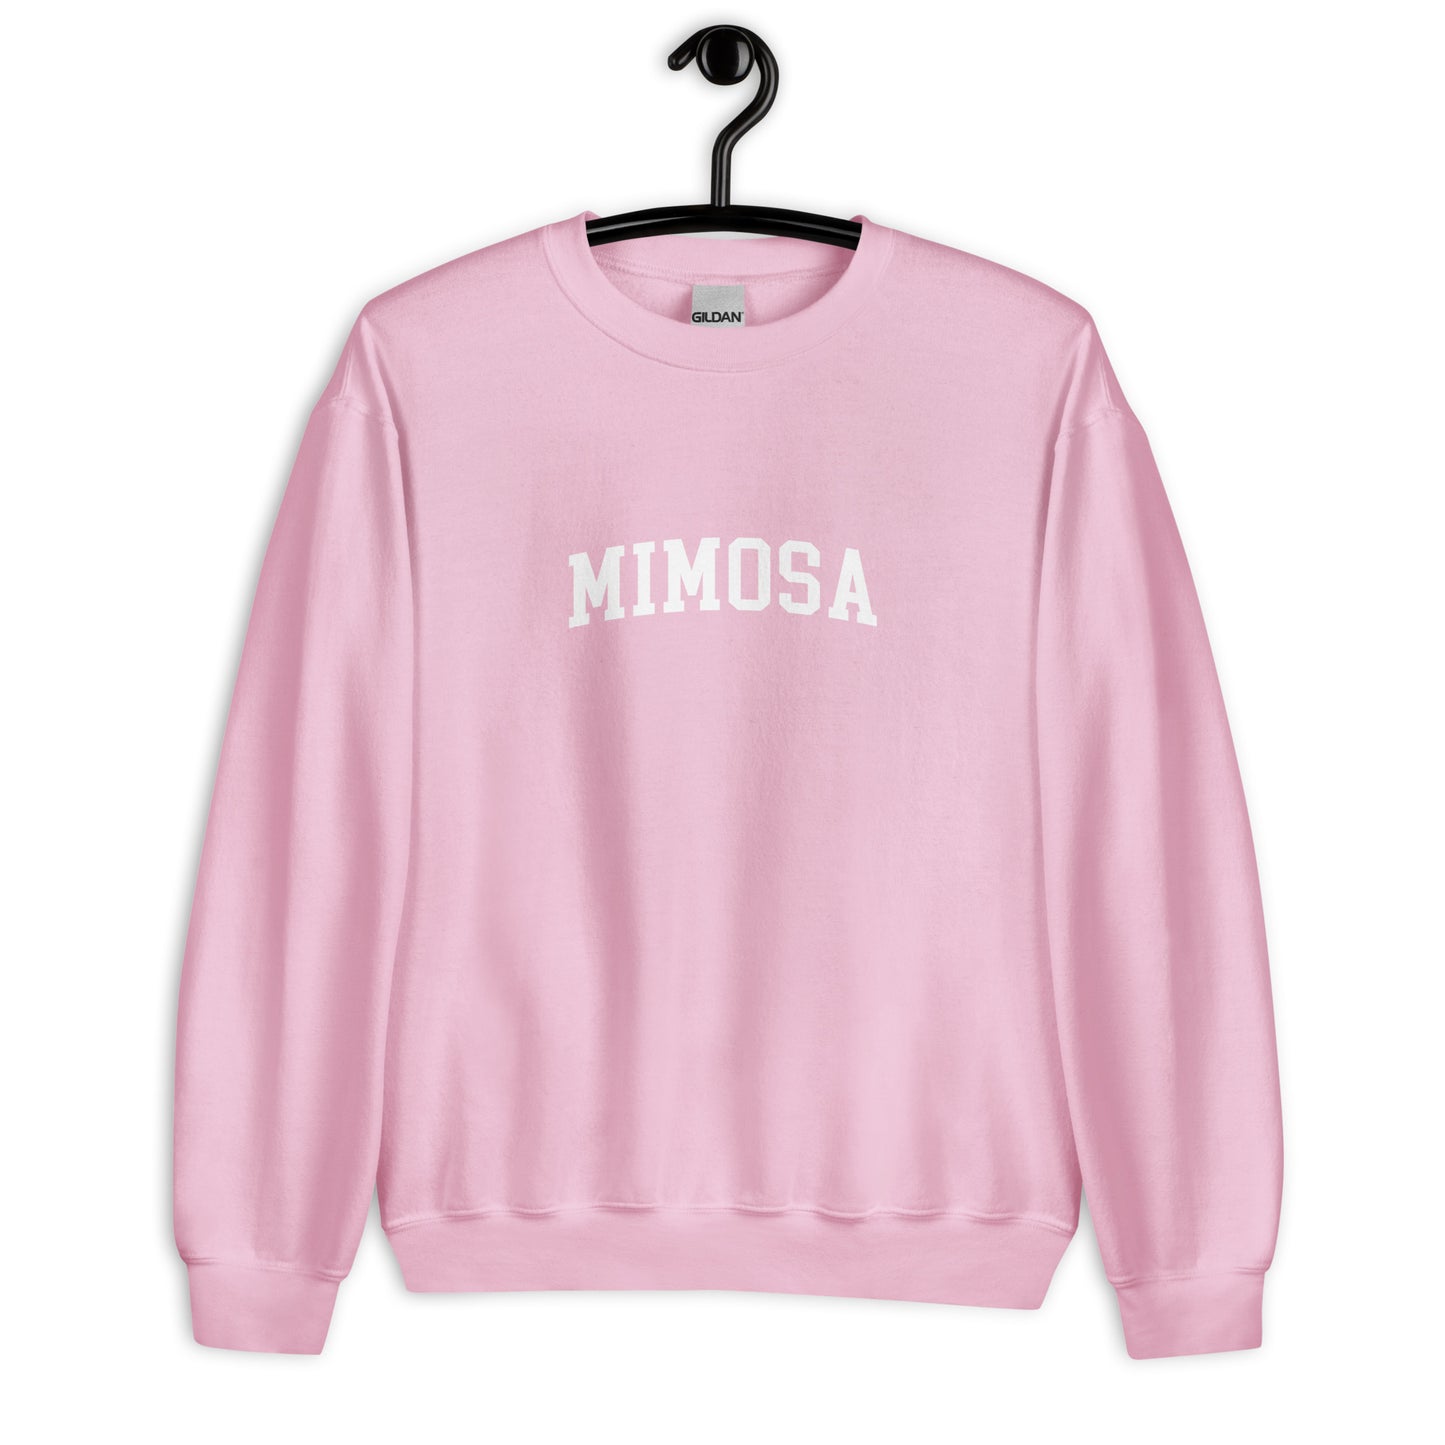 Mimosa Sweatshirt - Arched Font